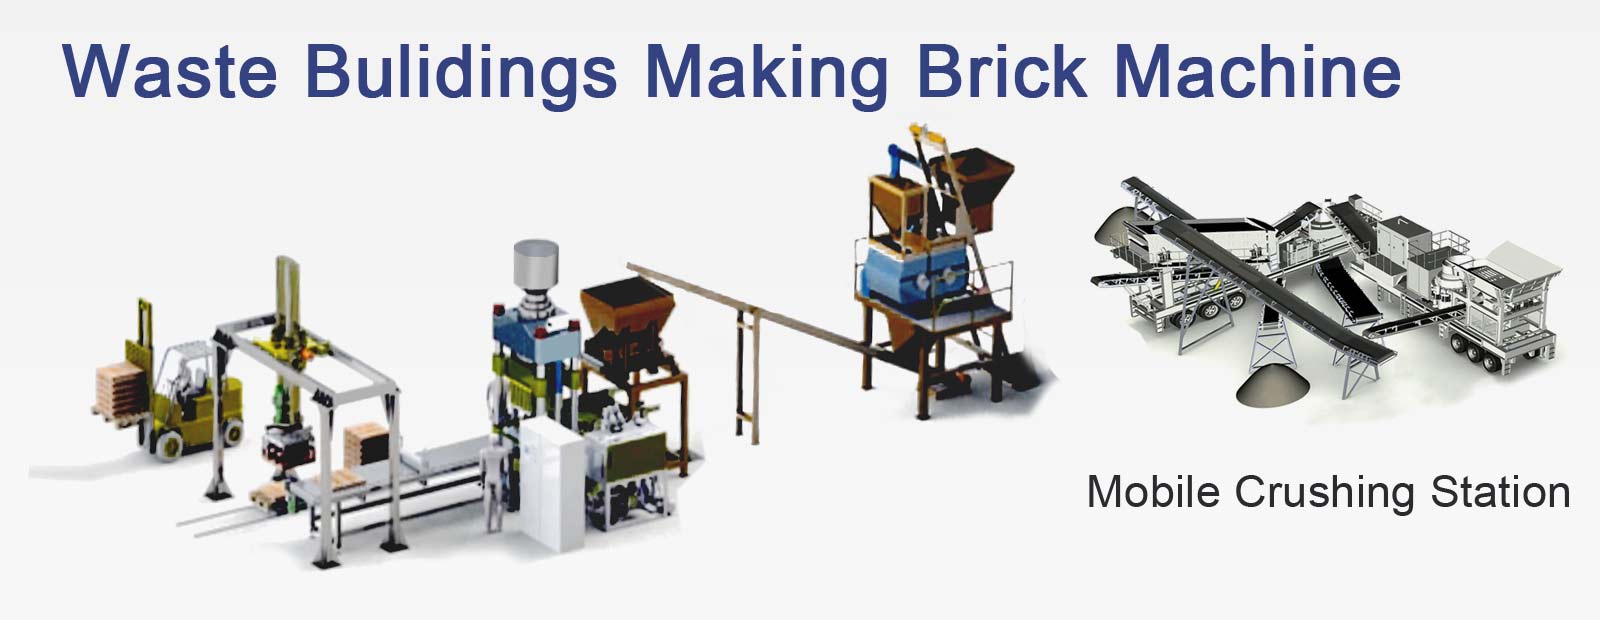 Waste Bulidings Making Brick Machine